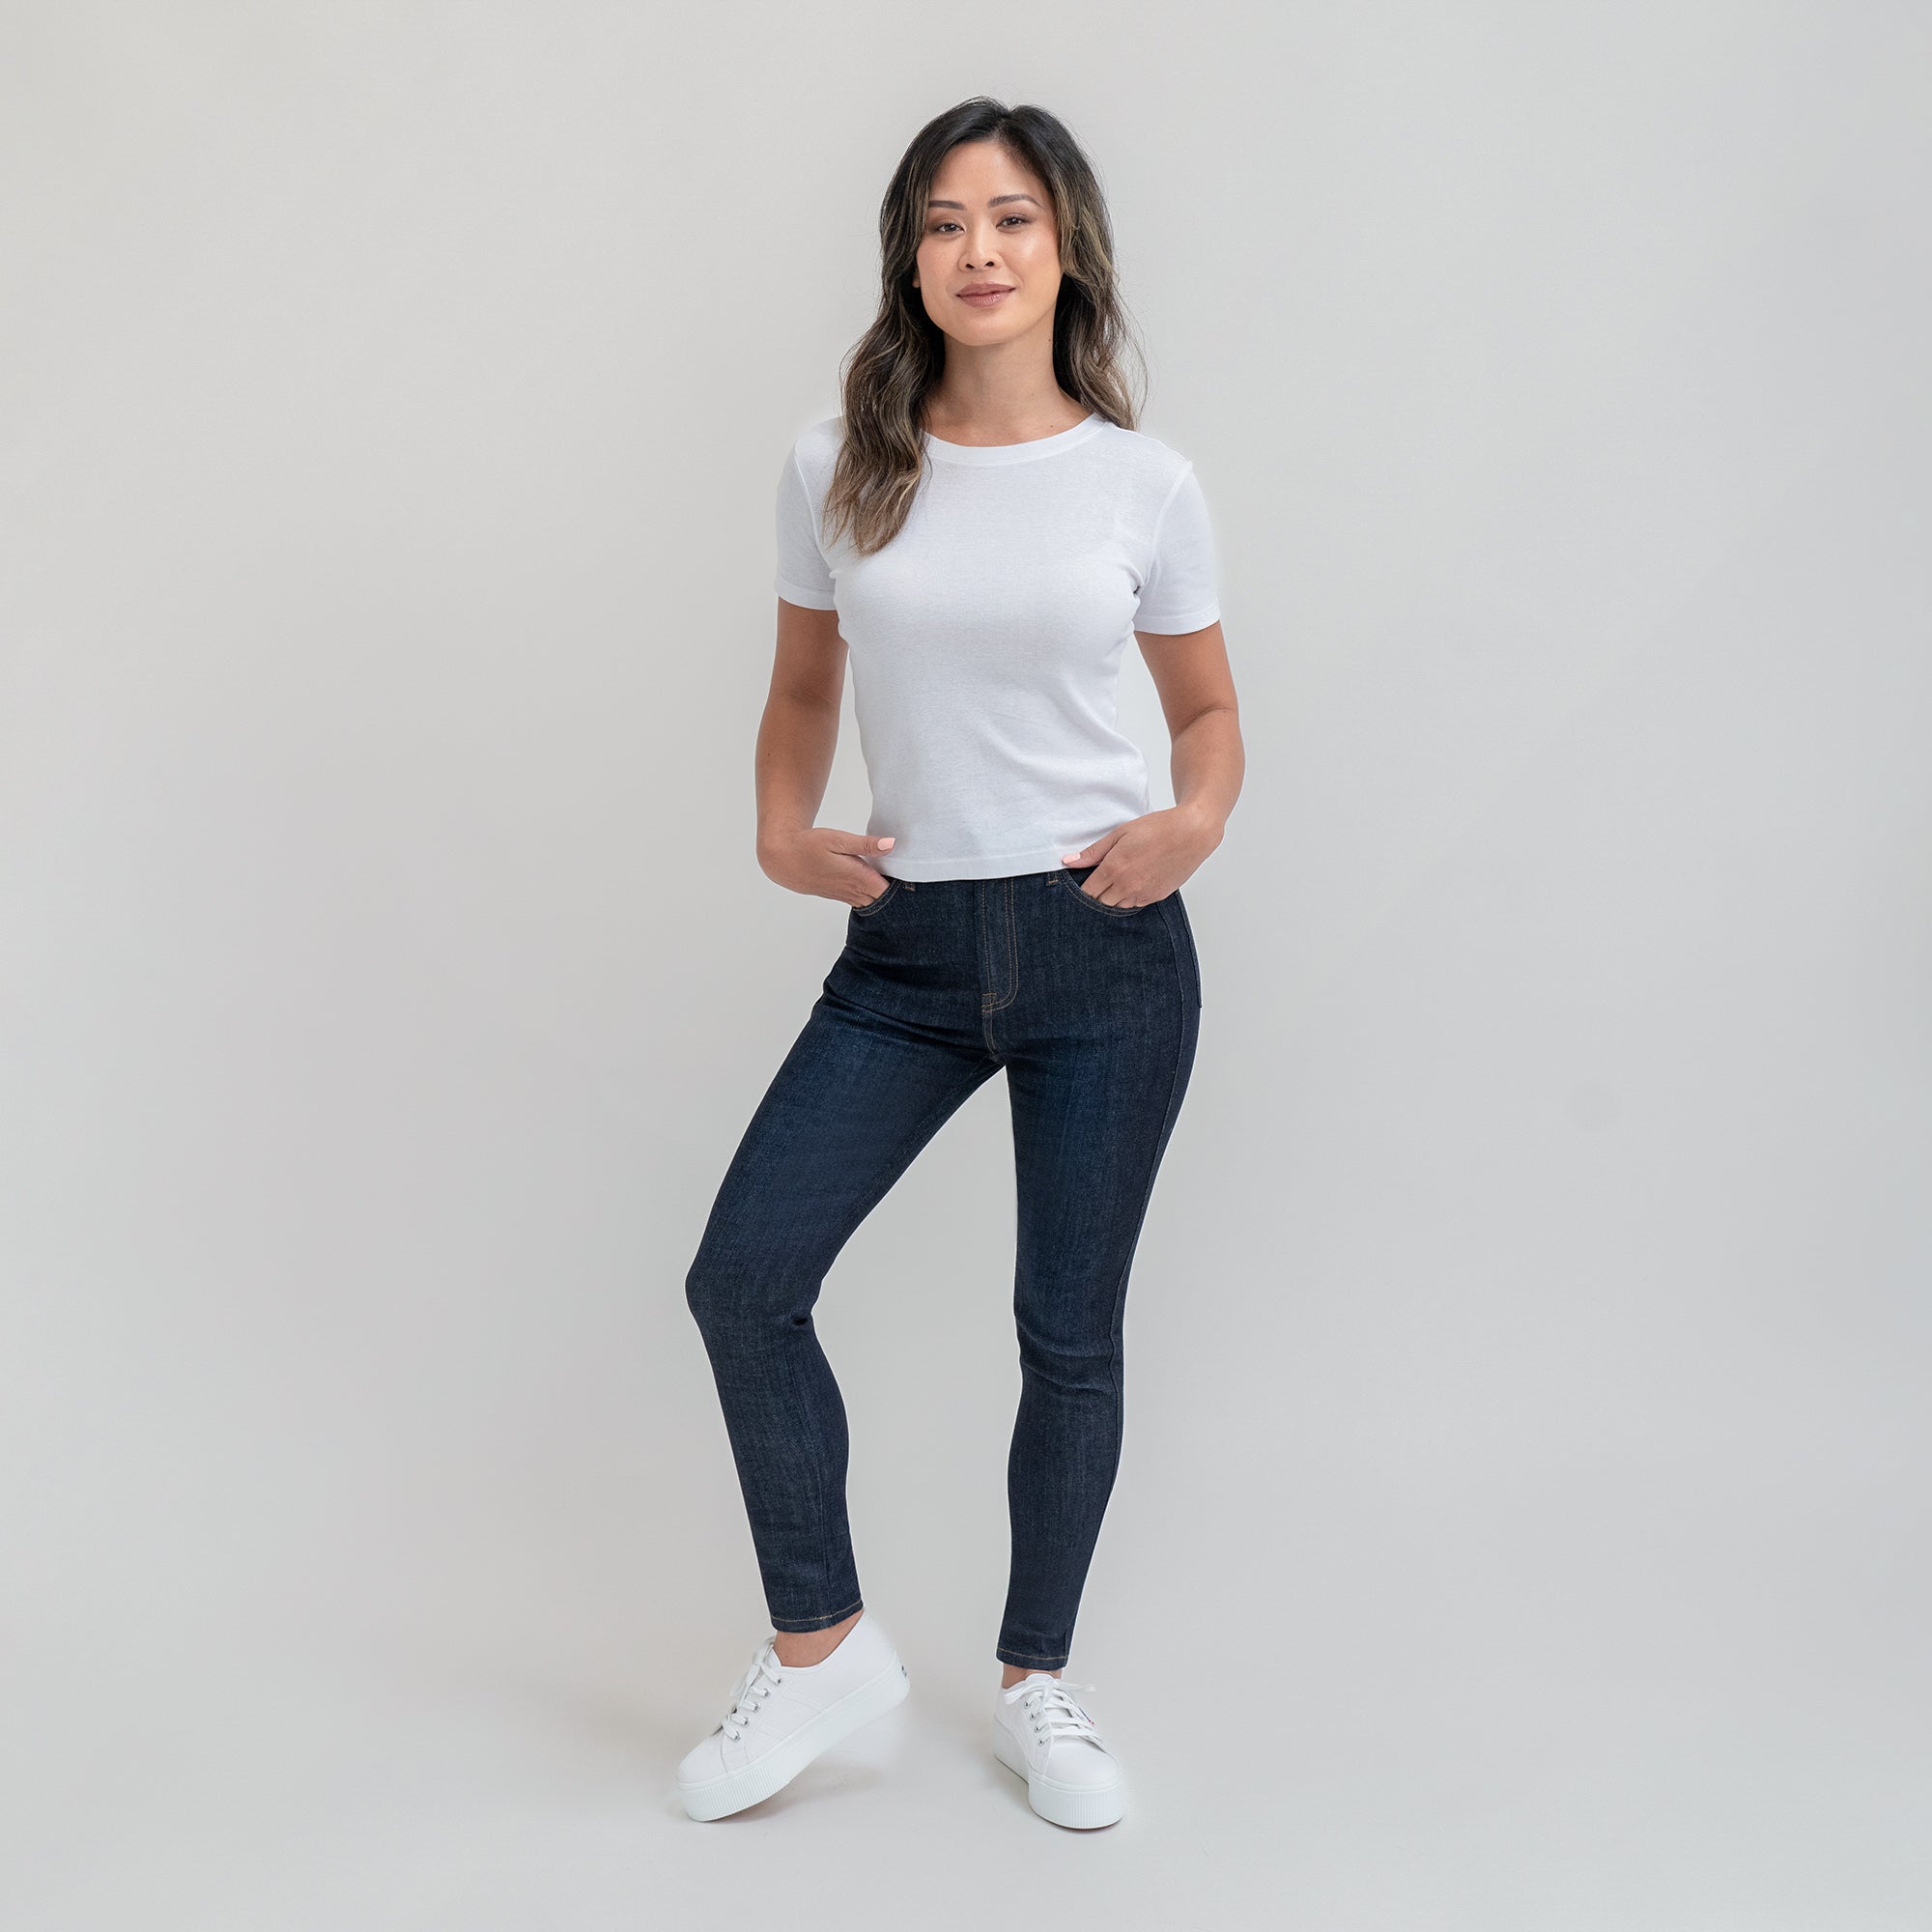 SENE - Sizeless Skinny Jeans